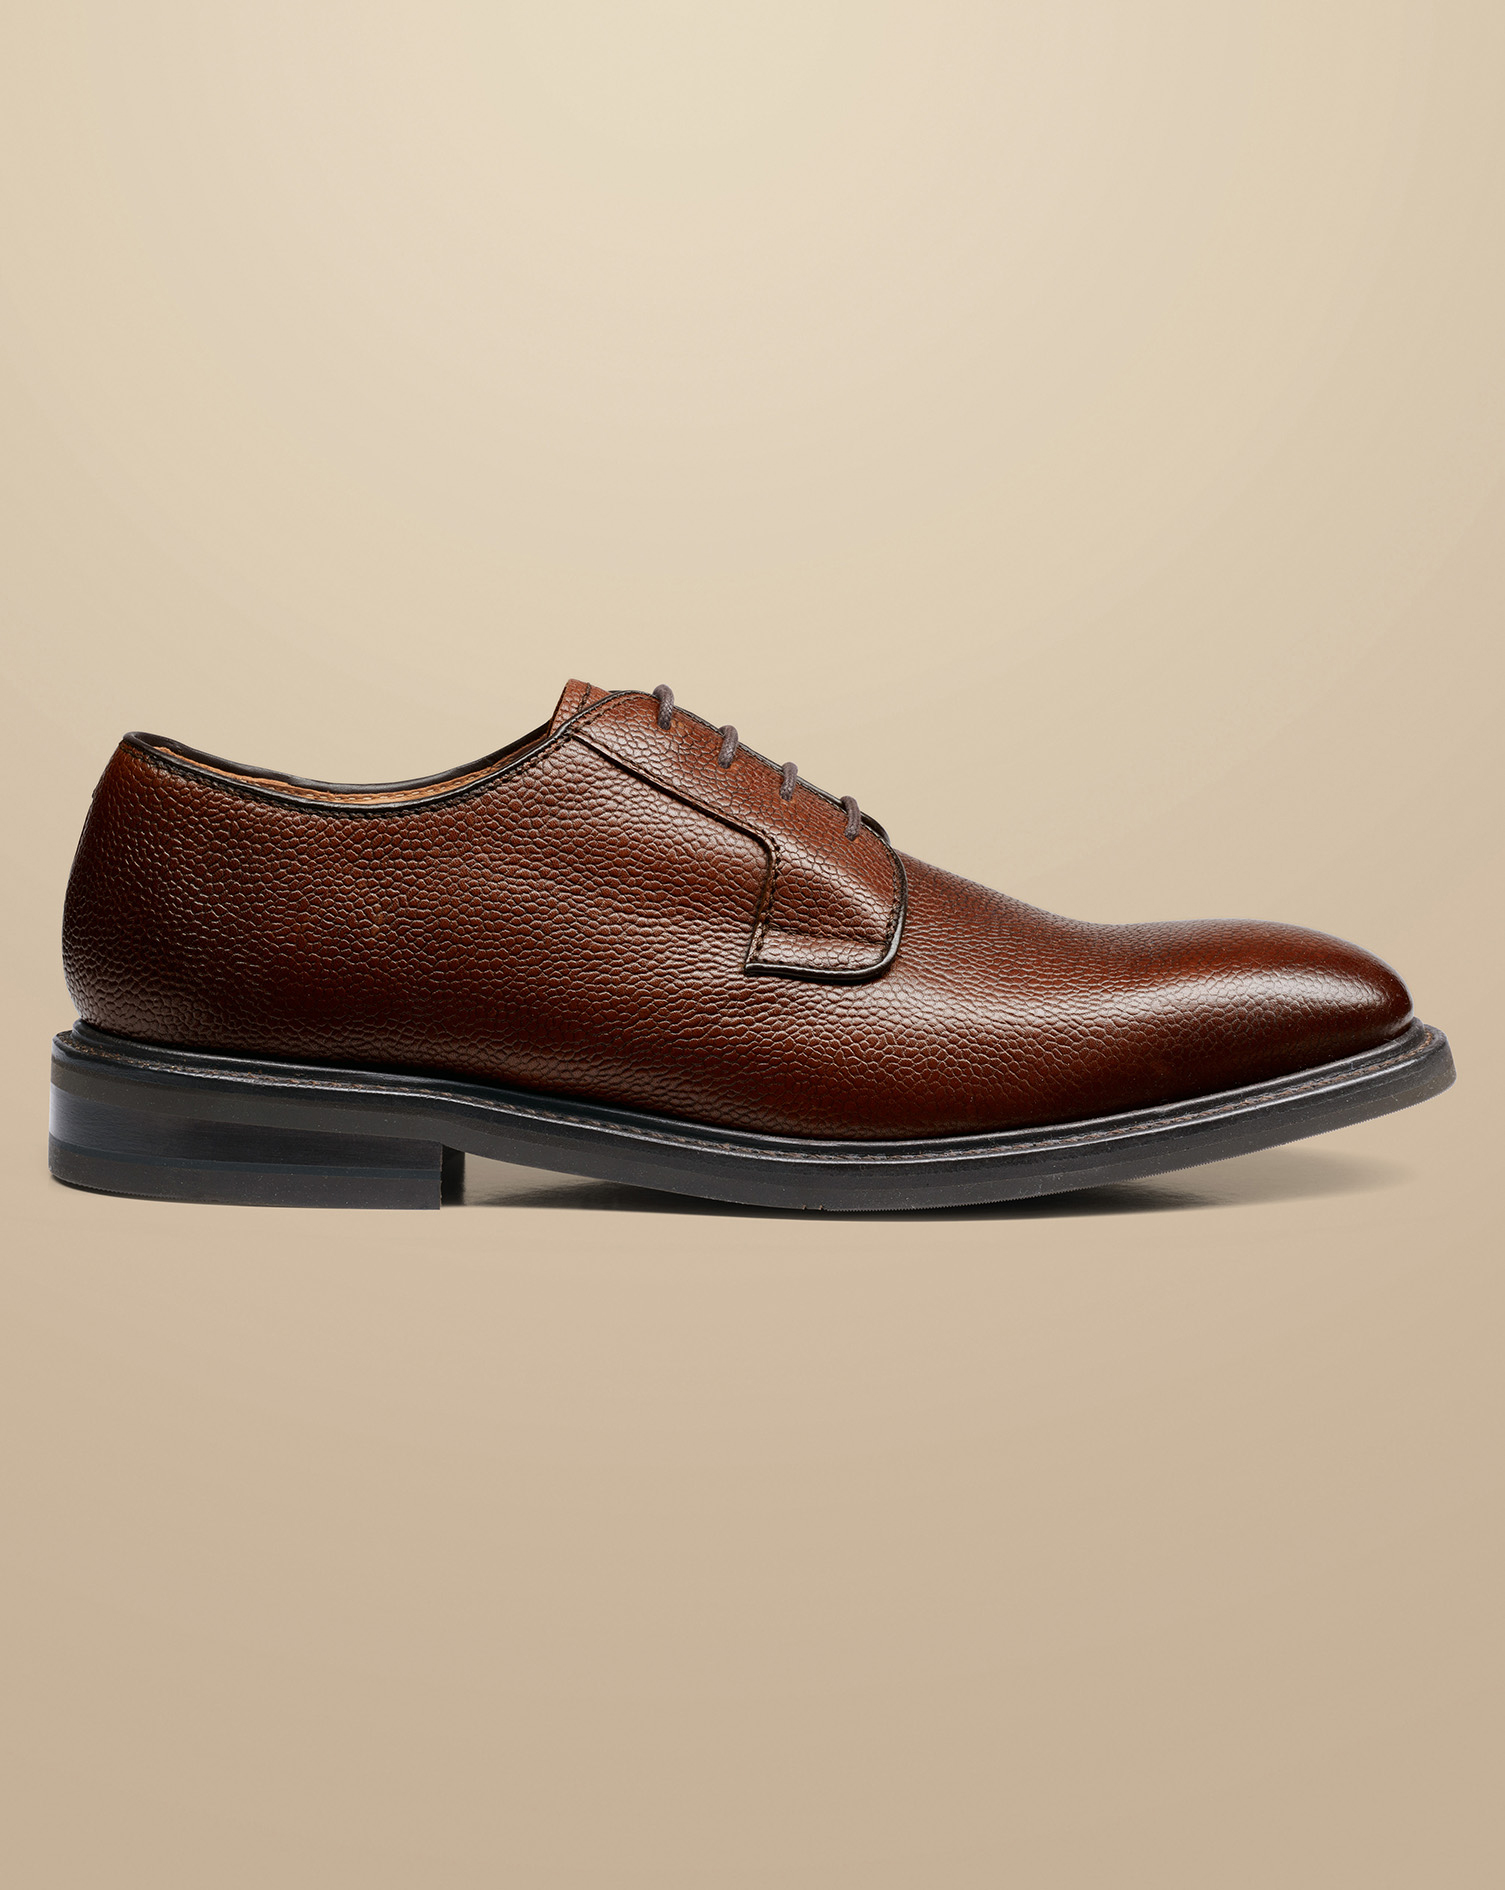 Men's Charles Tyrwhitt Grain Leather Derby Rubber Sole Shoe - Chestnut Brown Size 9.5
